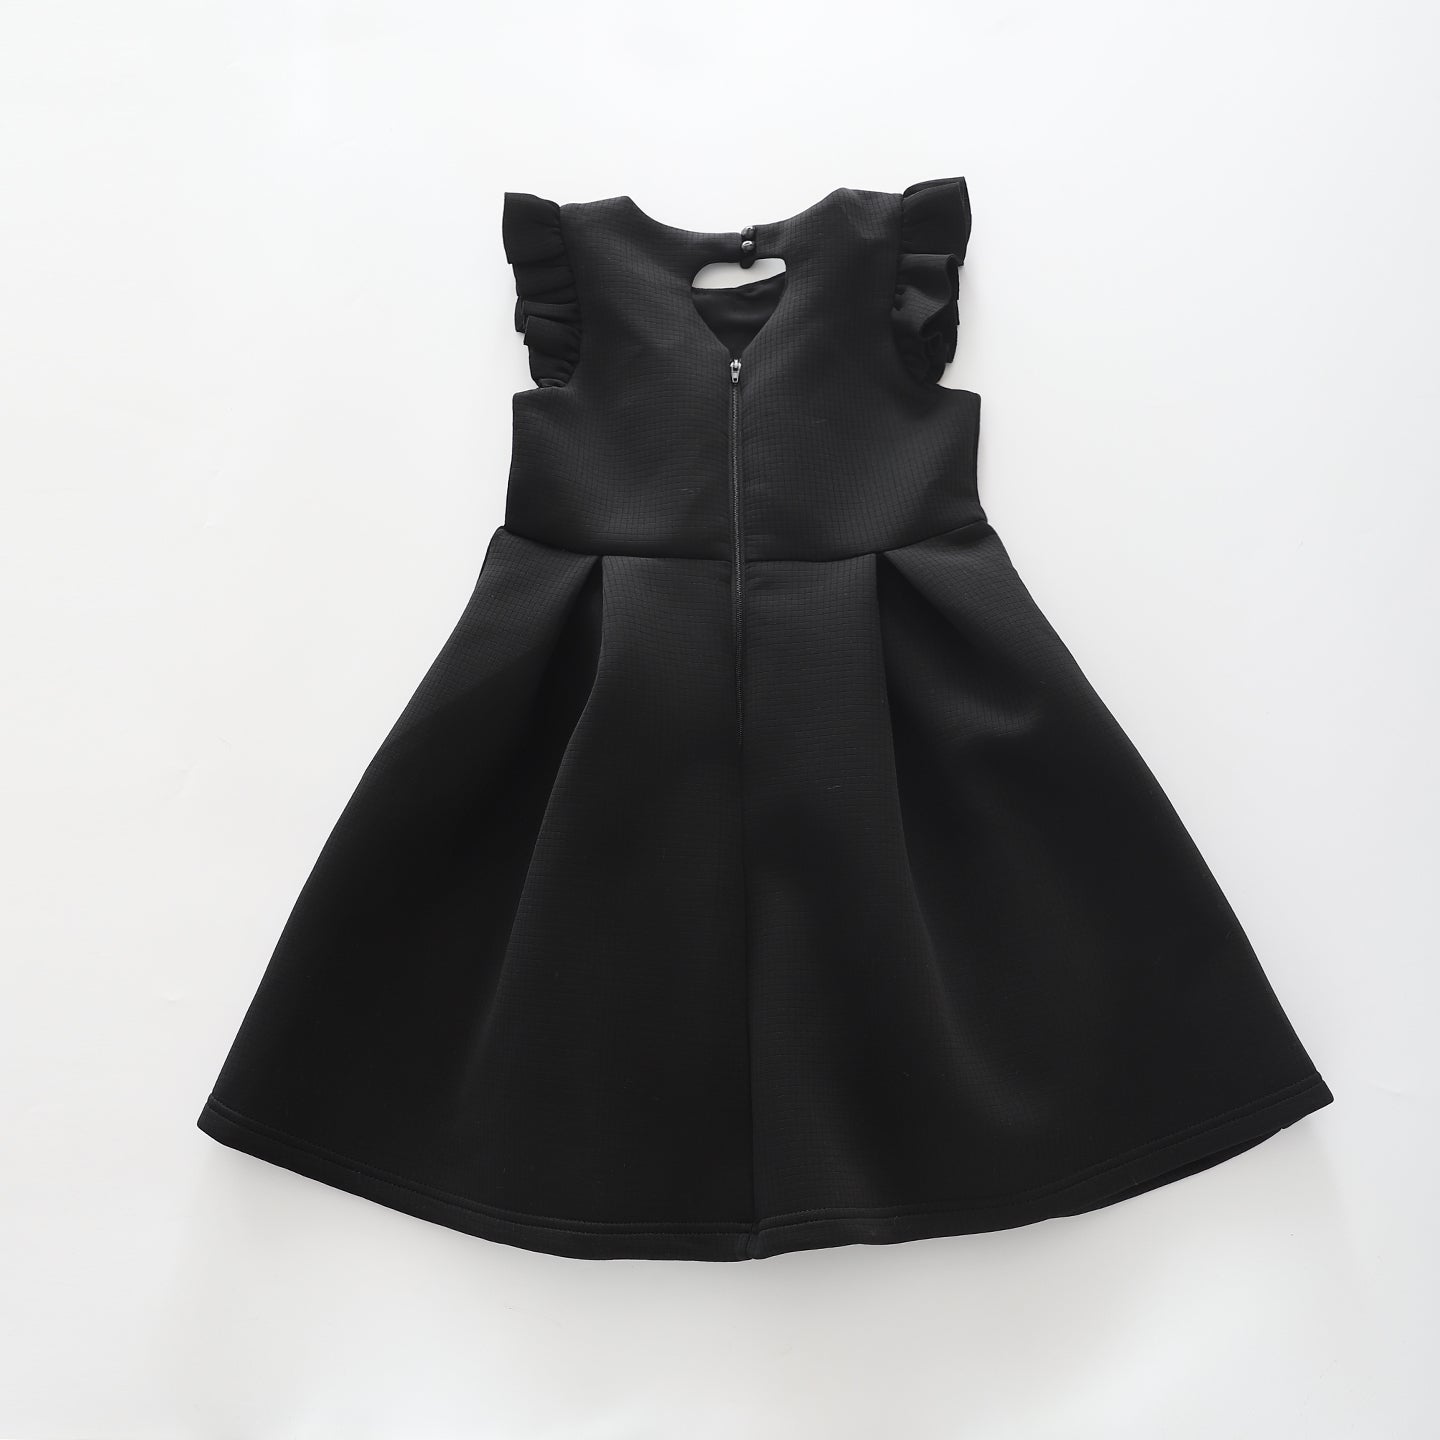 Black Textured, Girls Party Dress